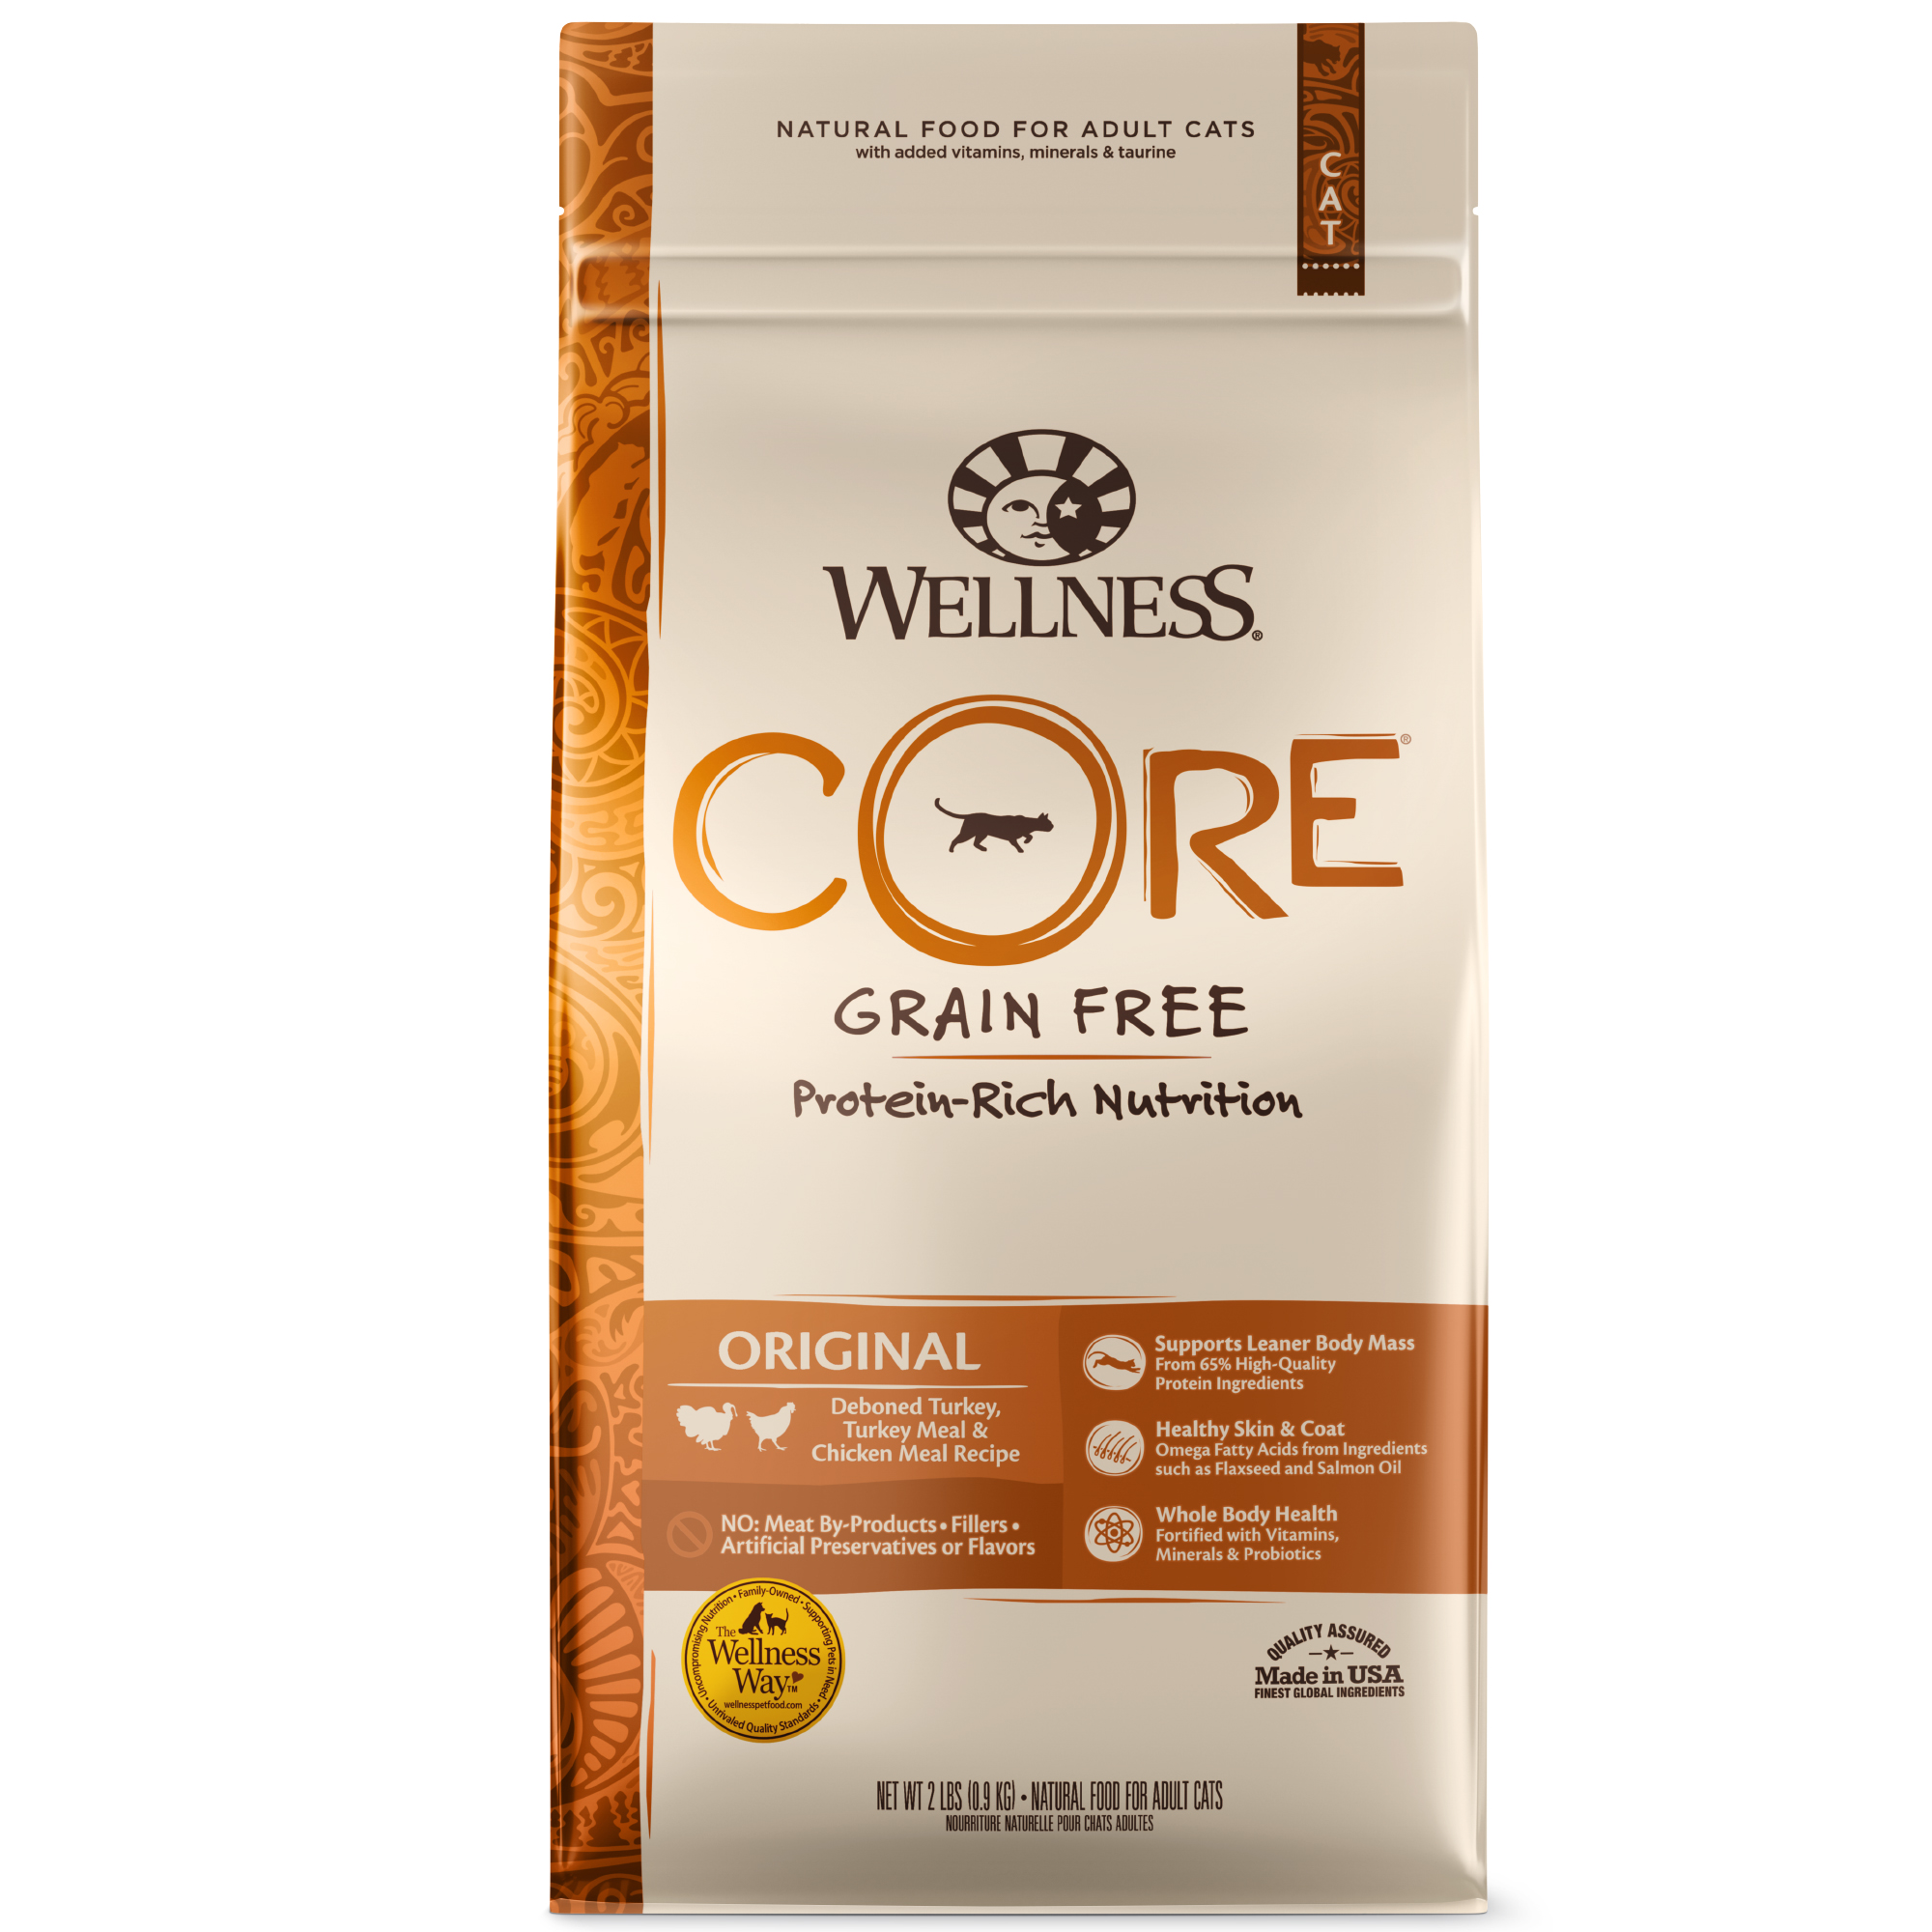 Wellness CORE Grain-Free Original Formula Dry Cat Food, 2 Pound Bag - image 1 of 7